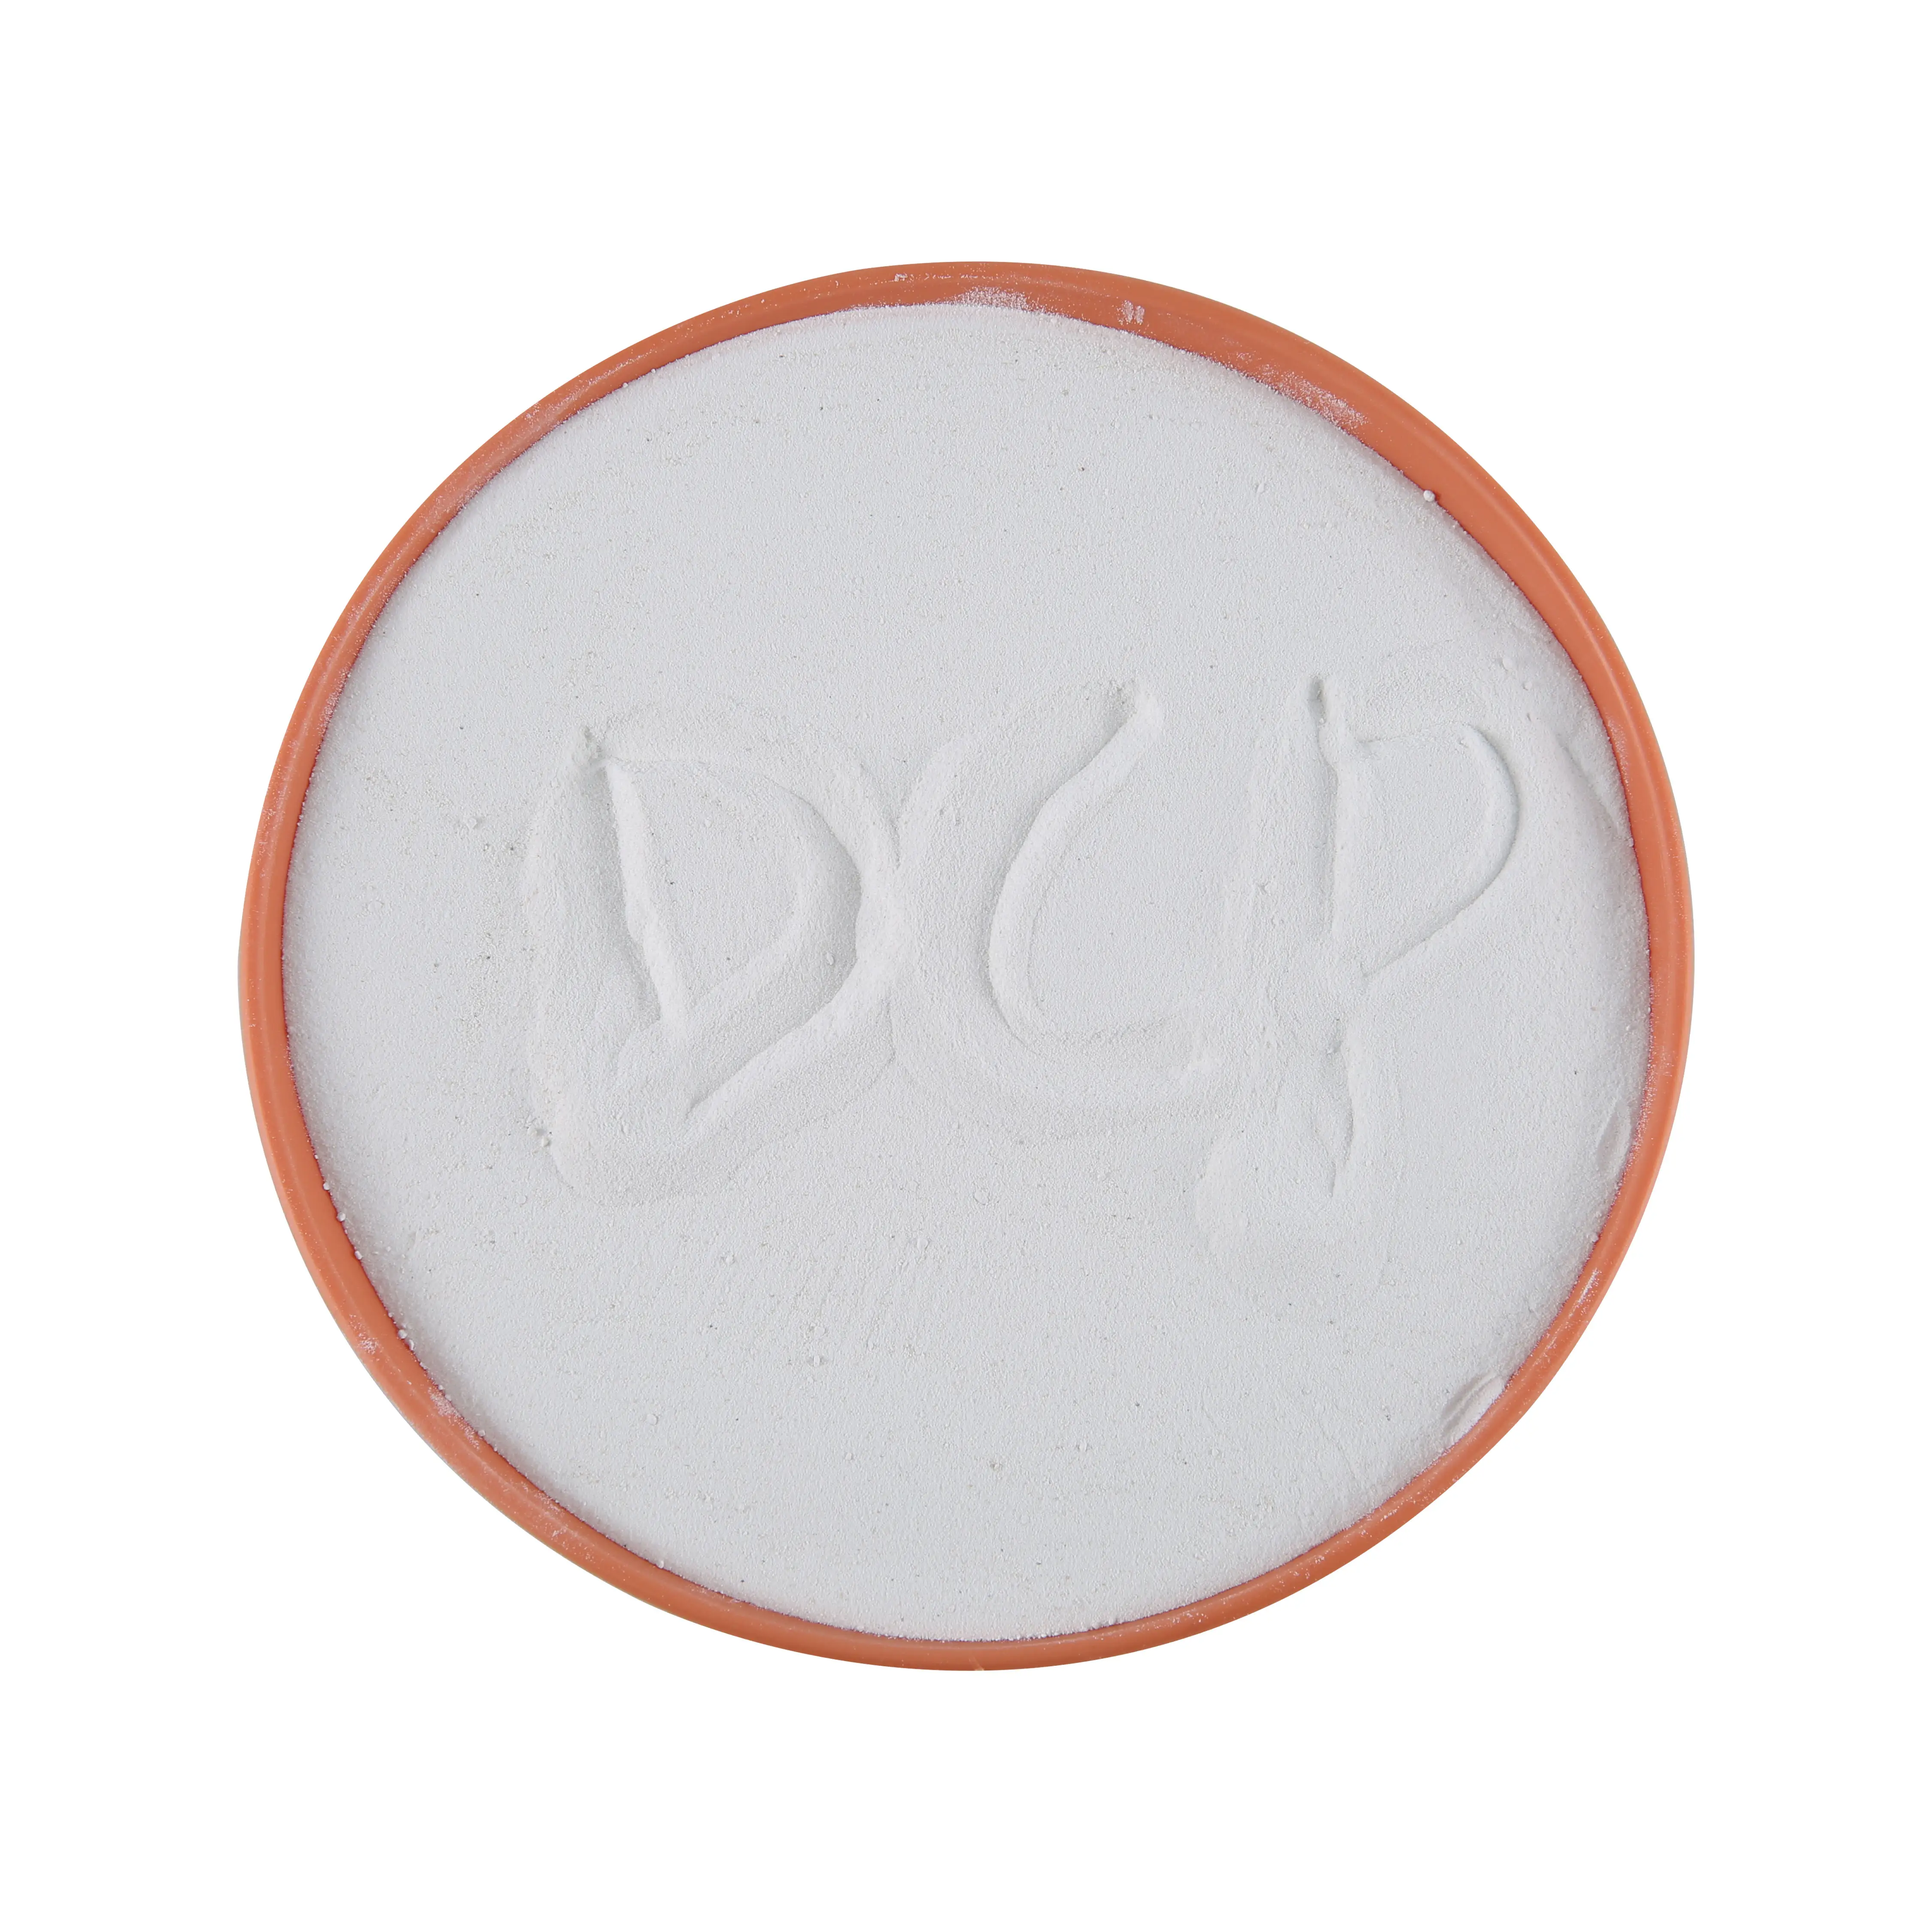 DCP-fosfato granular para aditivos de alimentación animal, fosfato dicalcio blanco de alta calidad